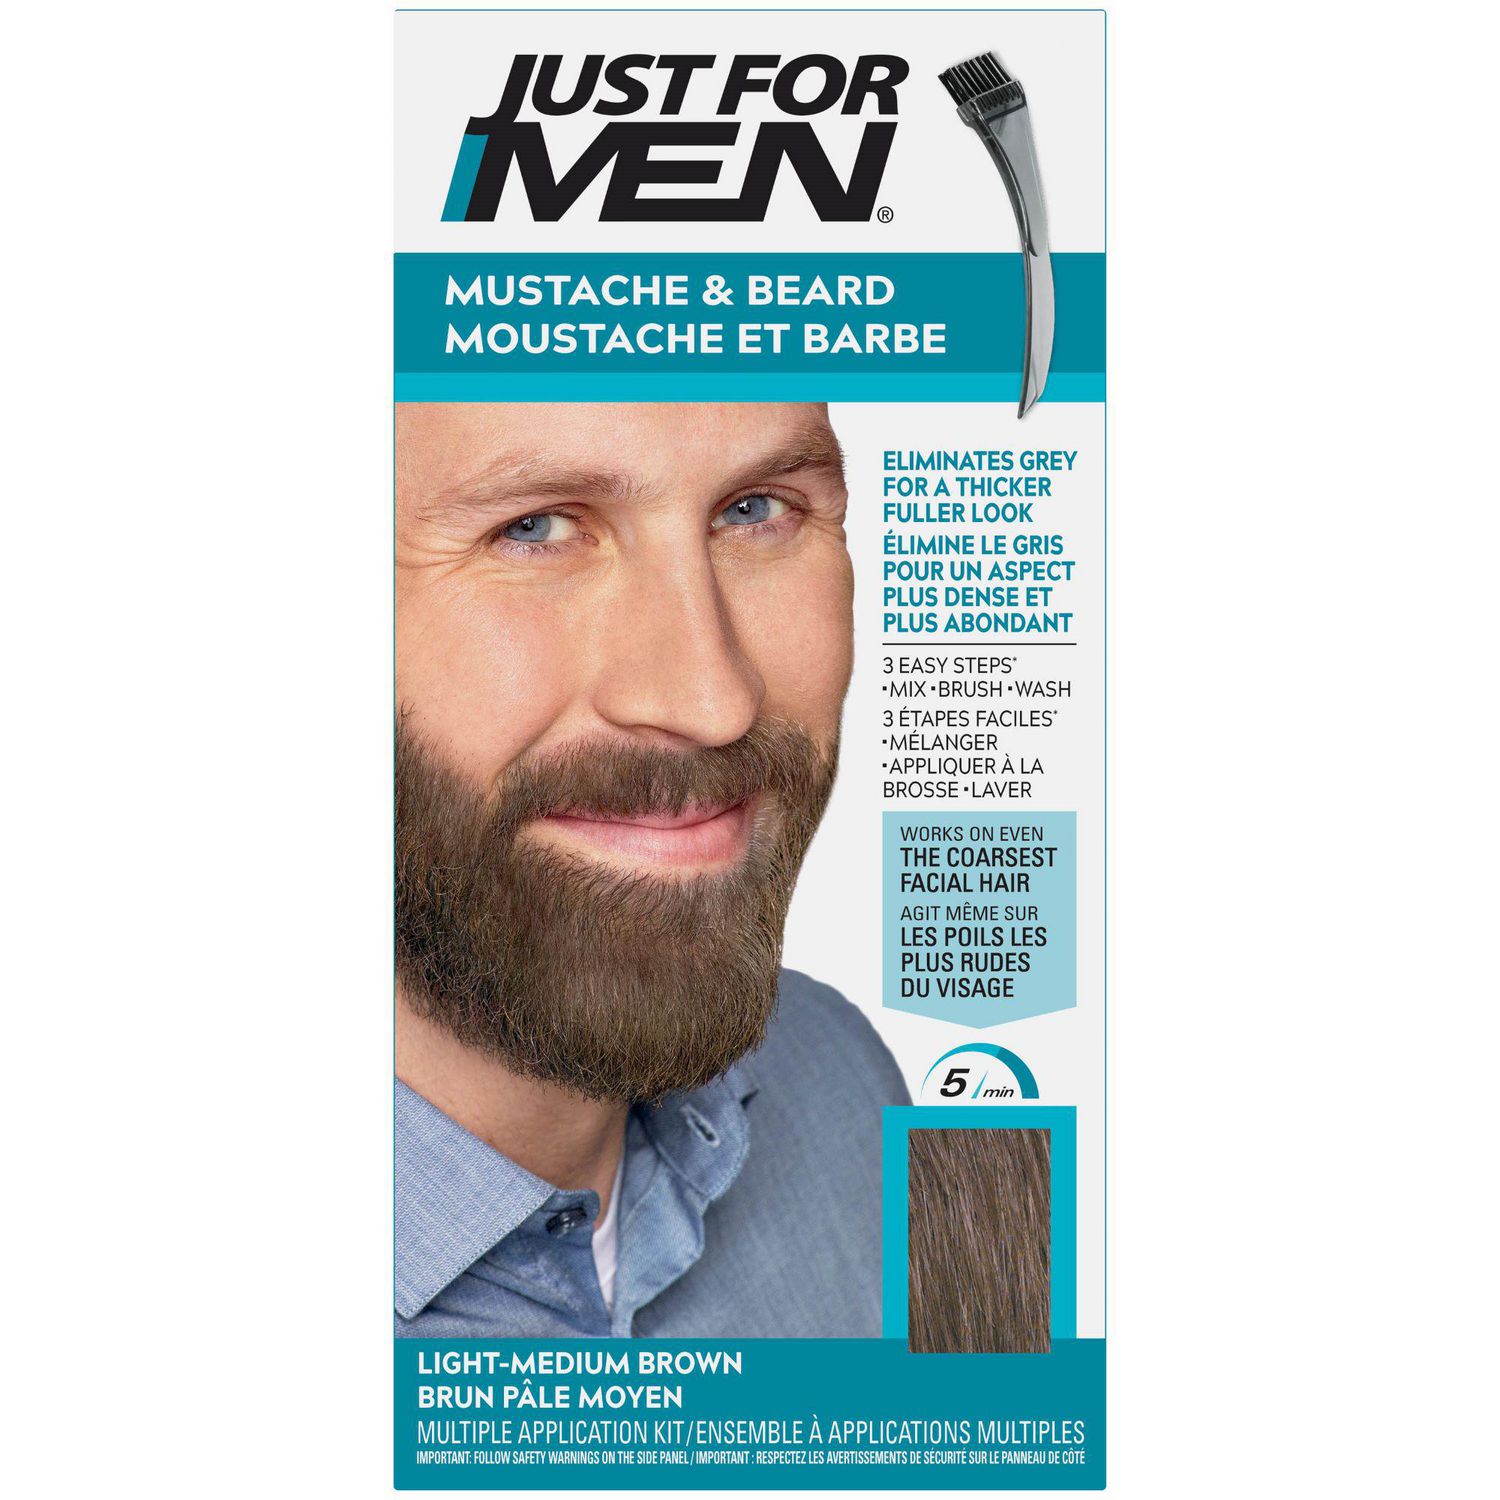 Just For Men Mustache And Beard Light-Medium Brown Haircolour M-30 |  Walmart Canada